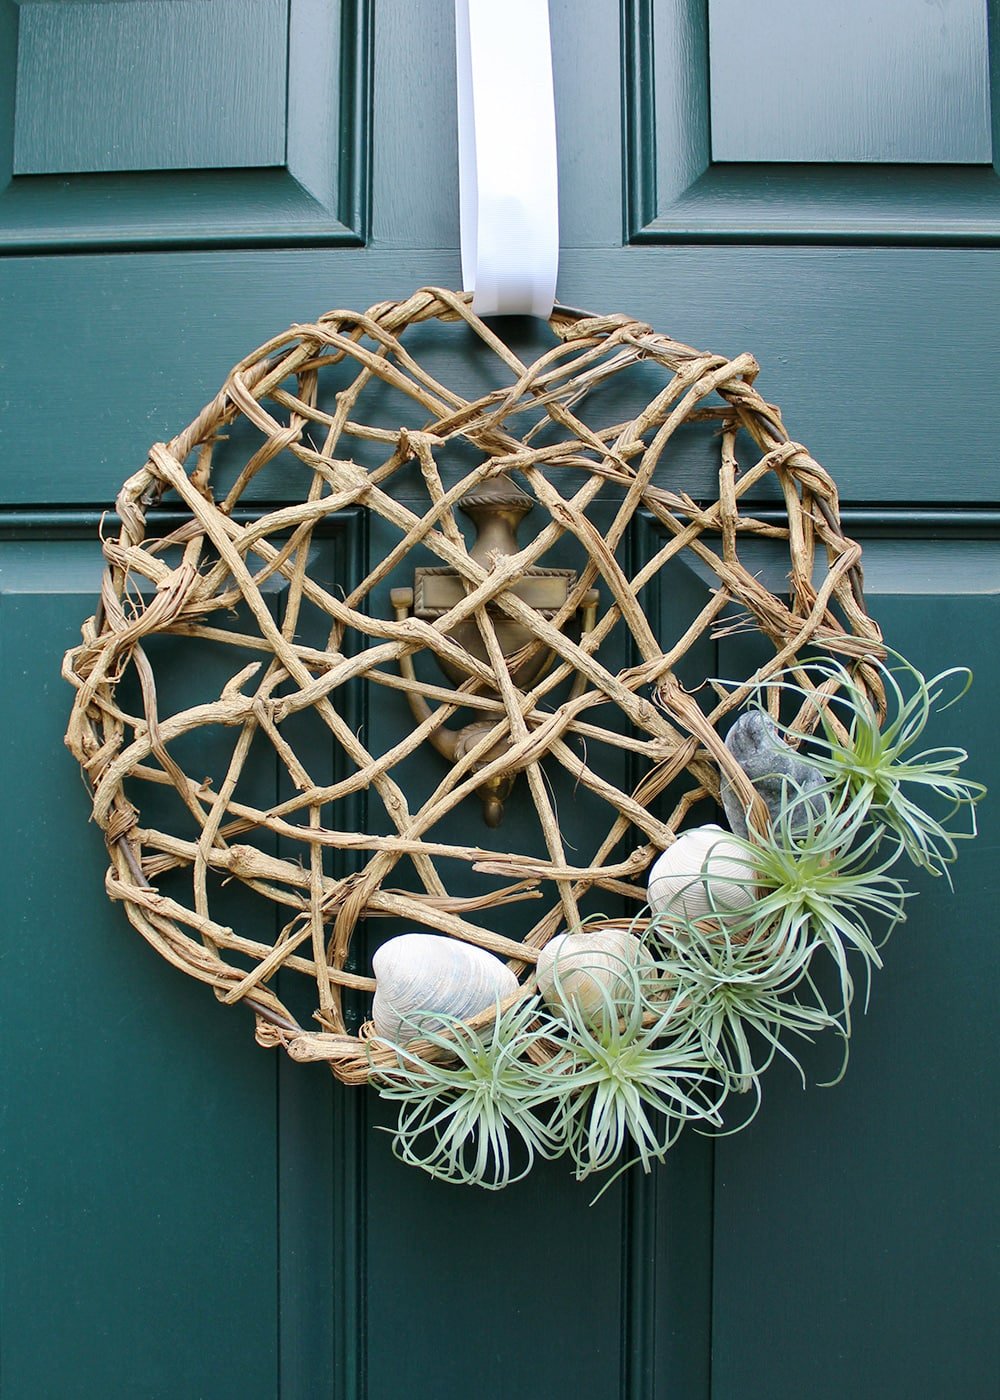 a coastal inspired wreath made of twigs, seashells, and greenery